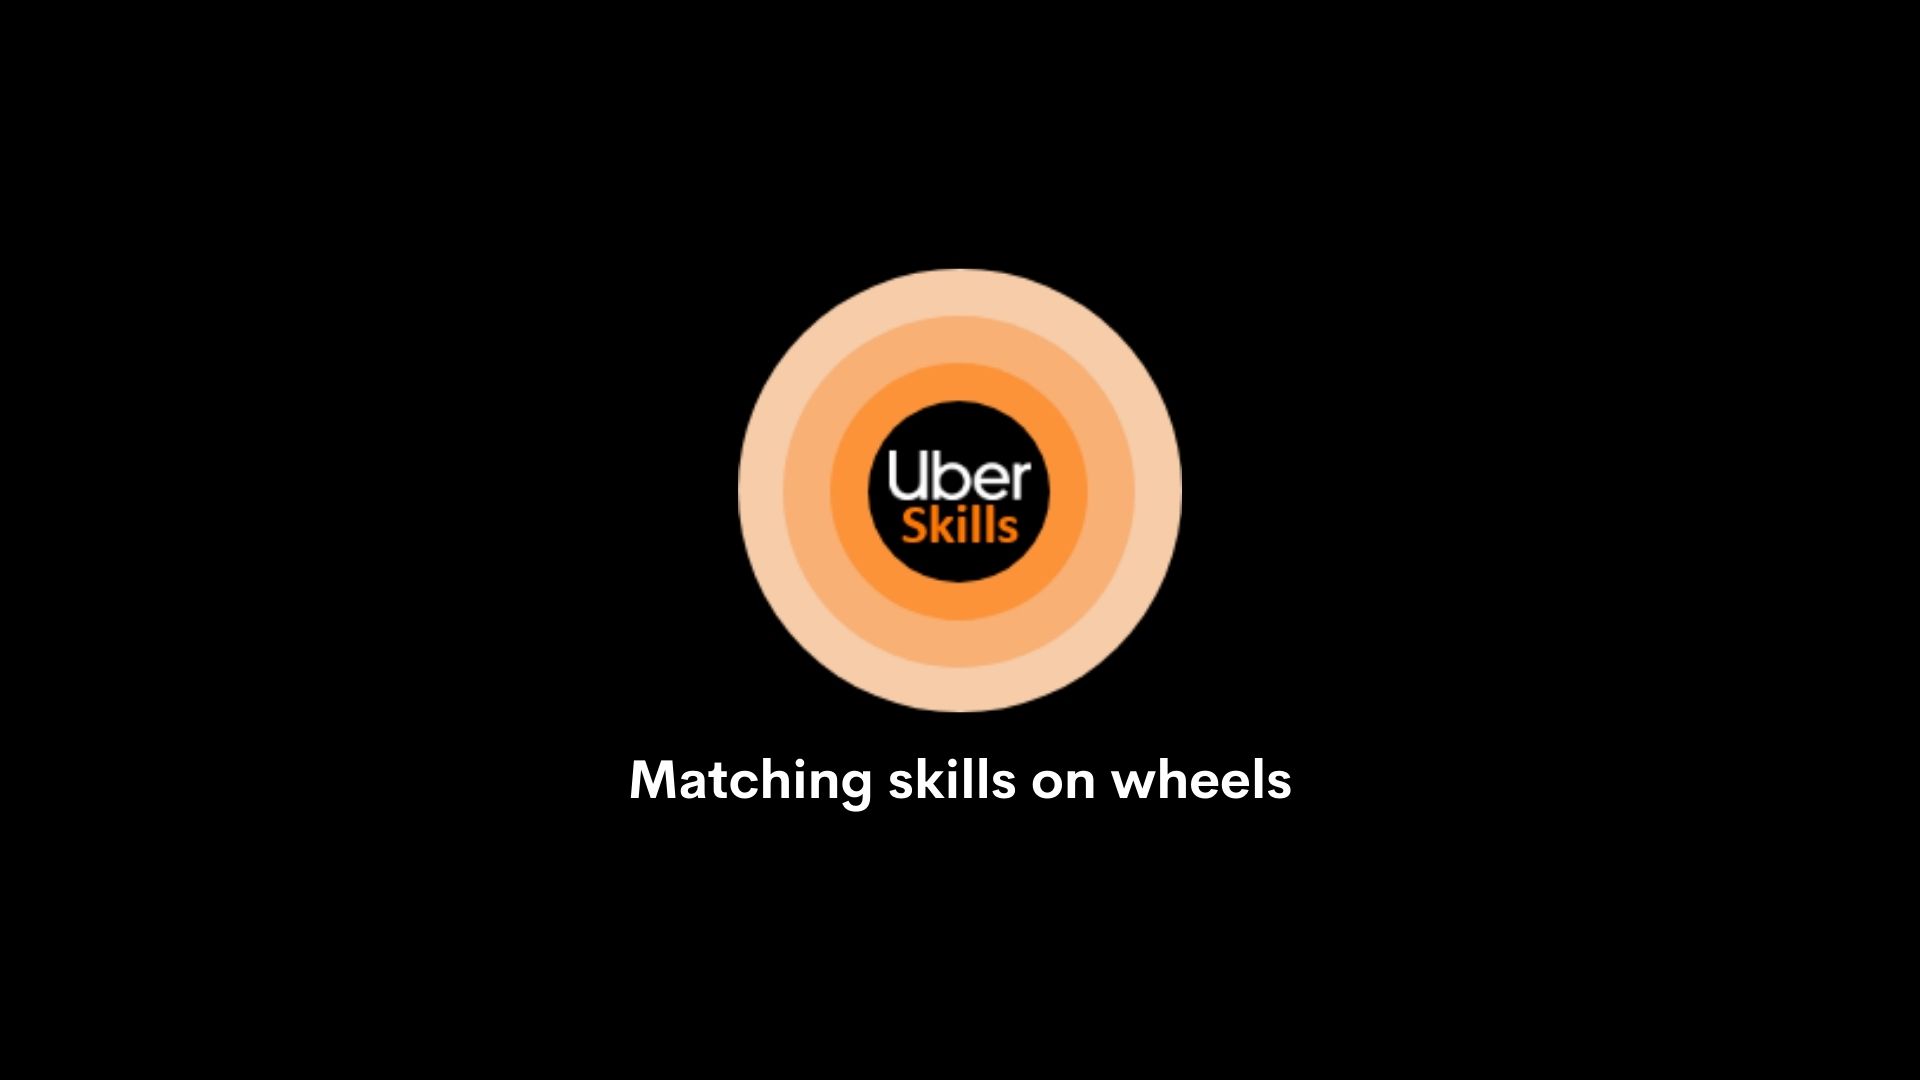 Uber Skills